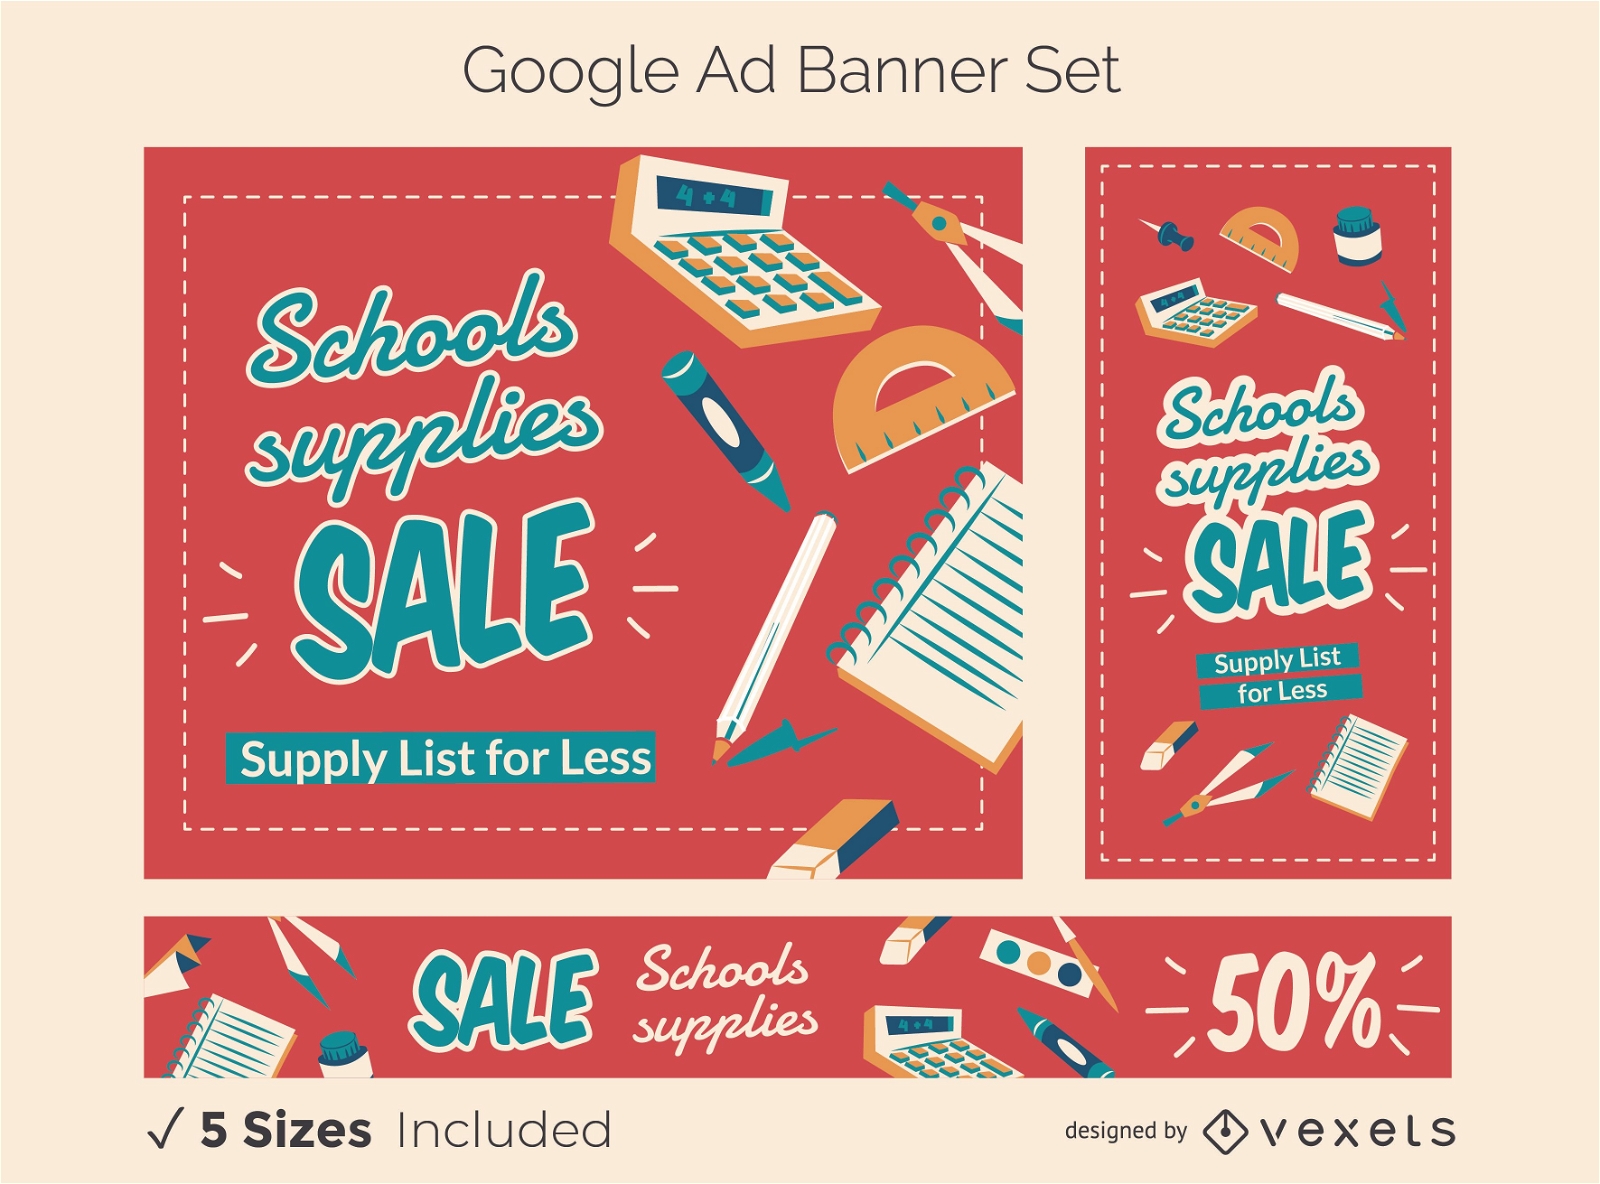 Descarga Vector De Conjunto De Banners De Anuncios De Google De Promoción  Escolar